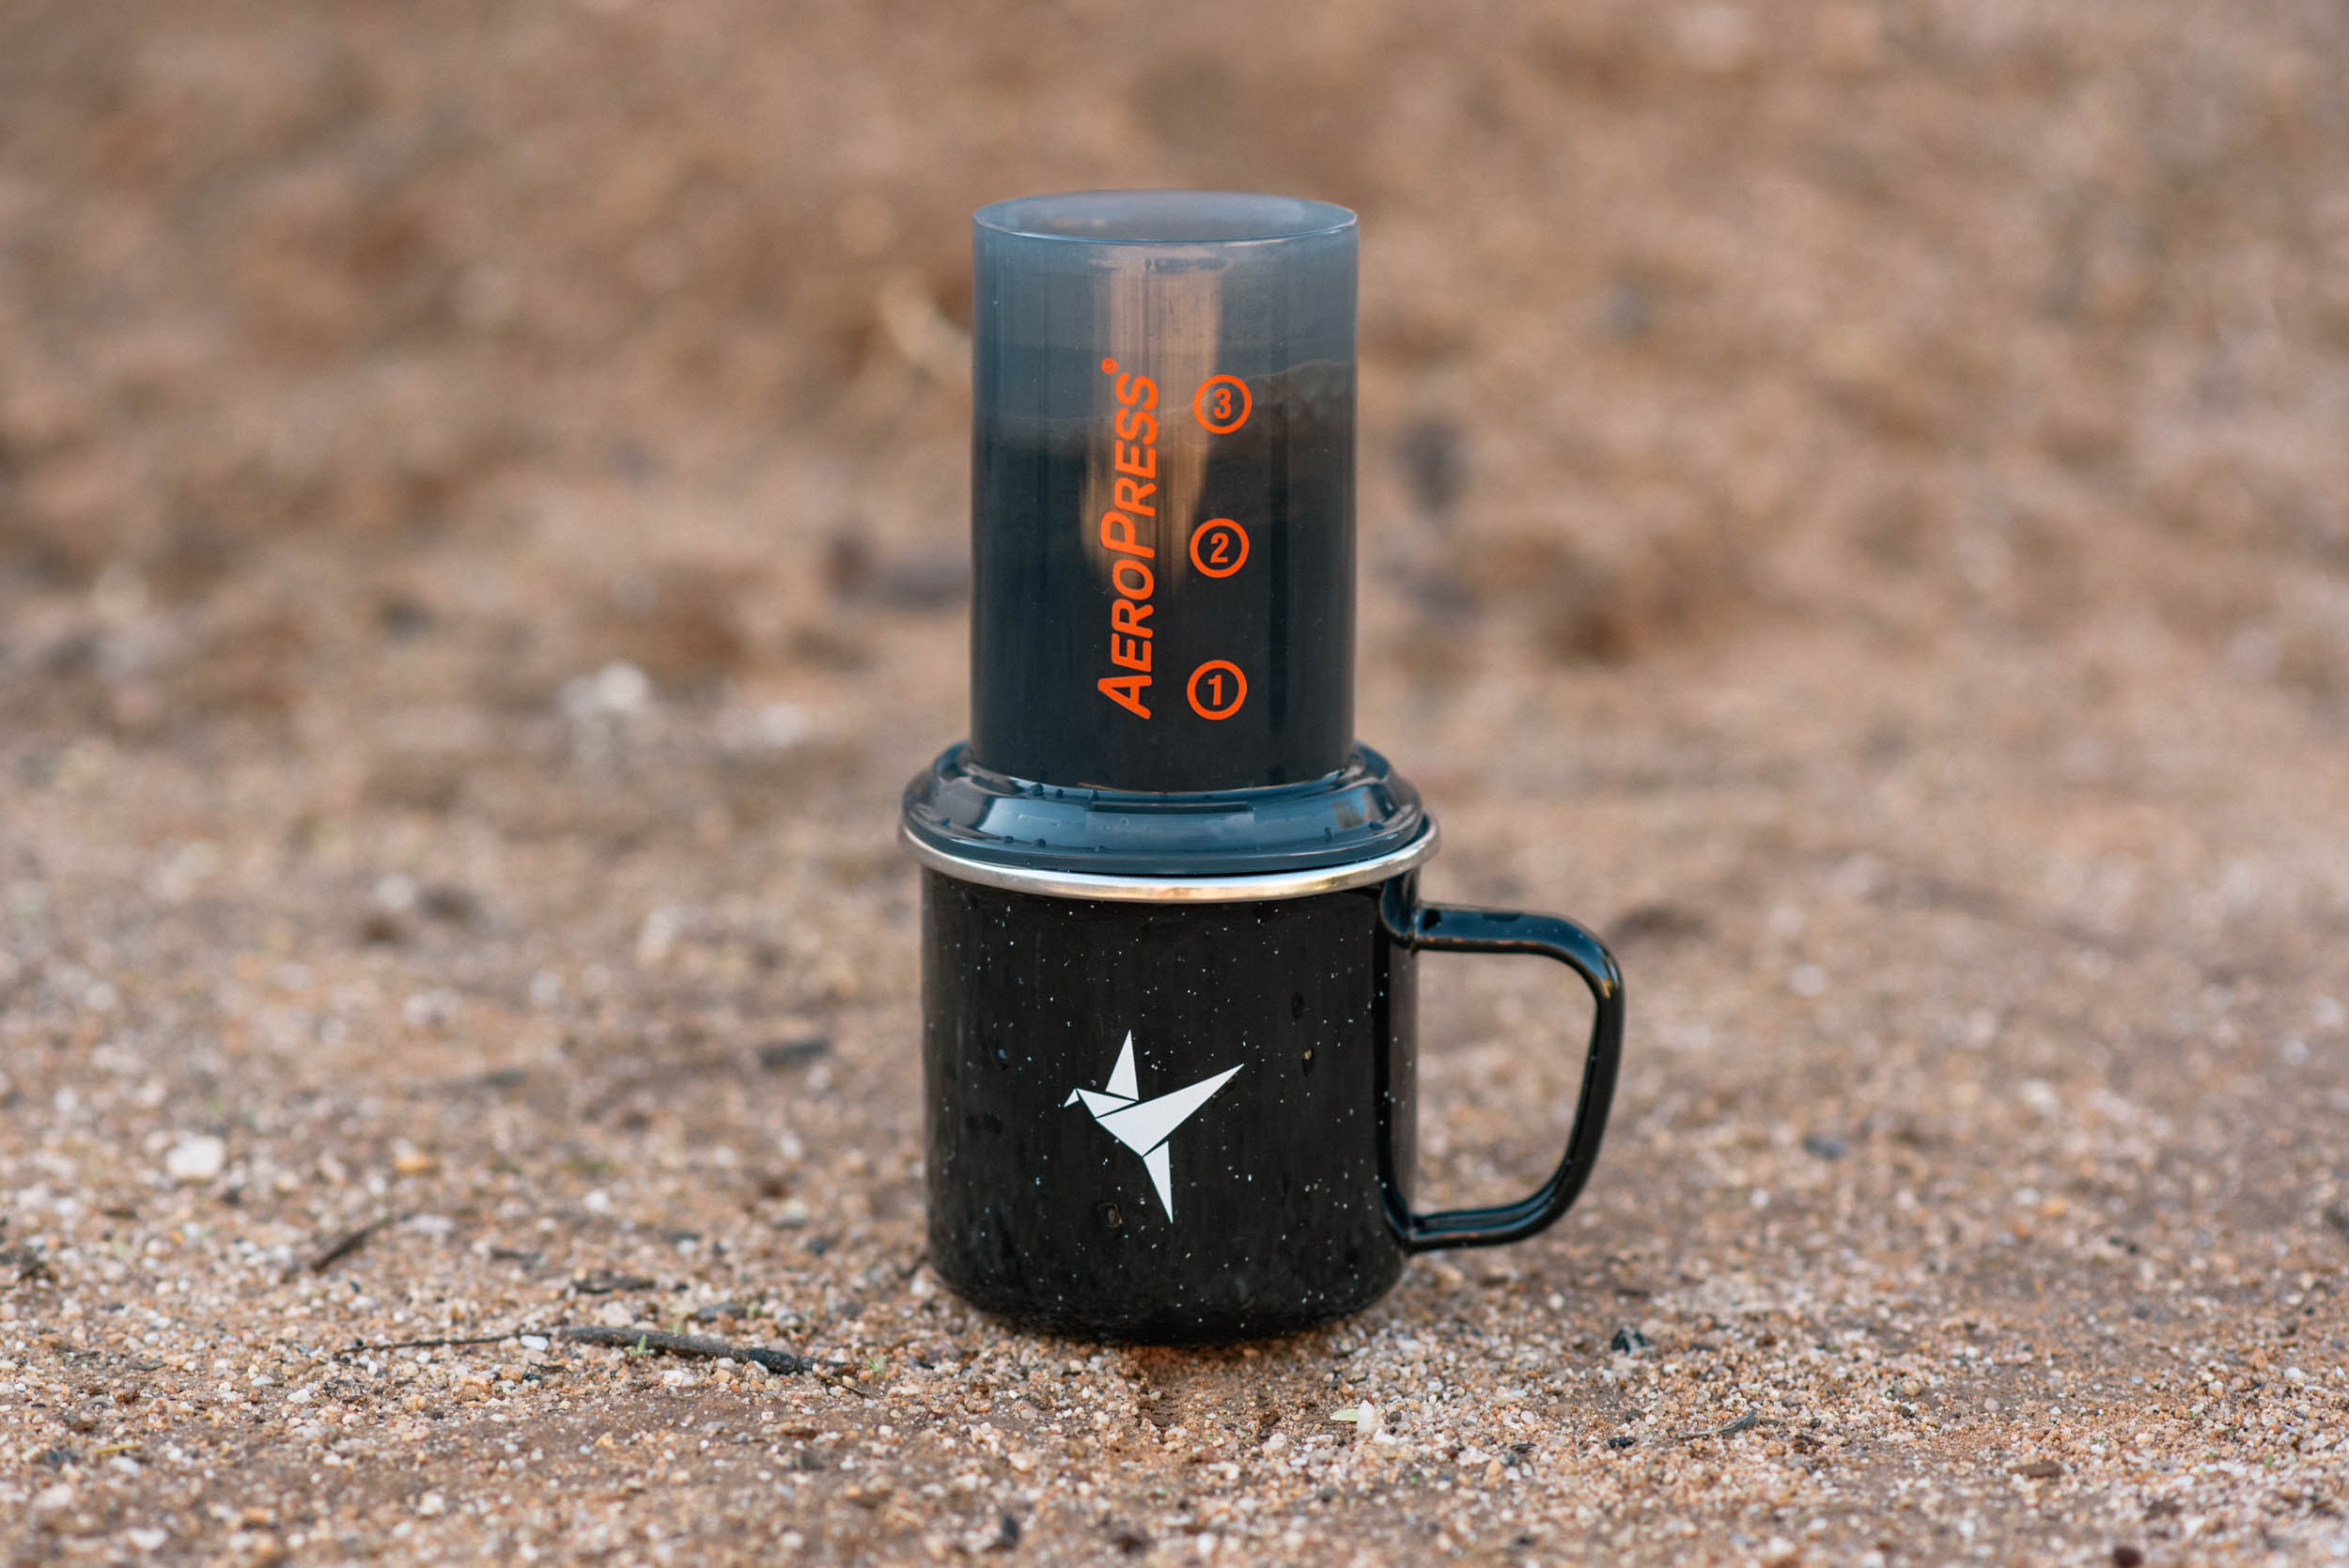 AeroPress Go Review, Compact Camp Coffee 